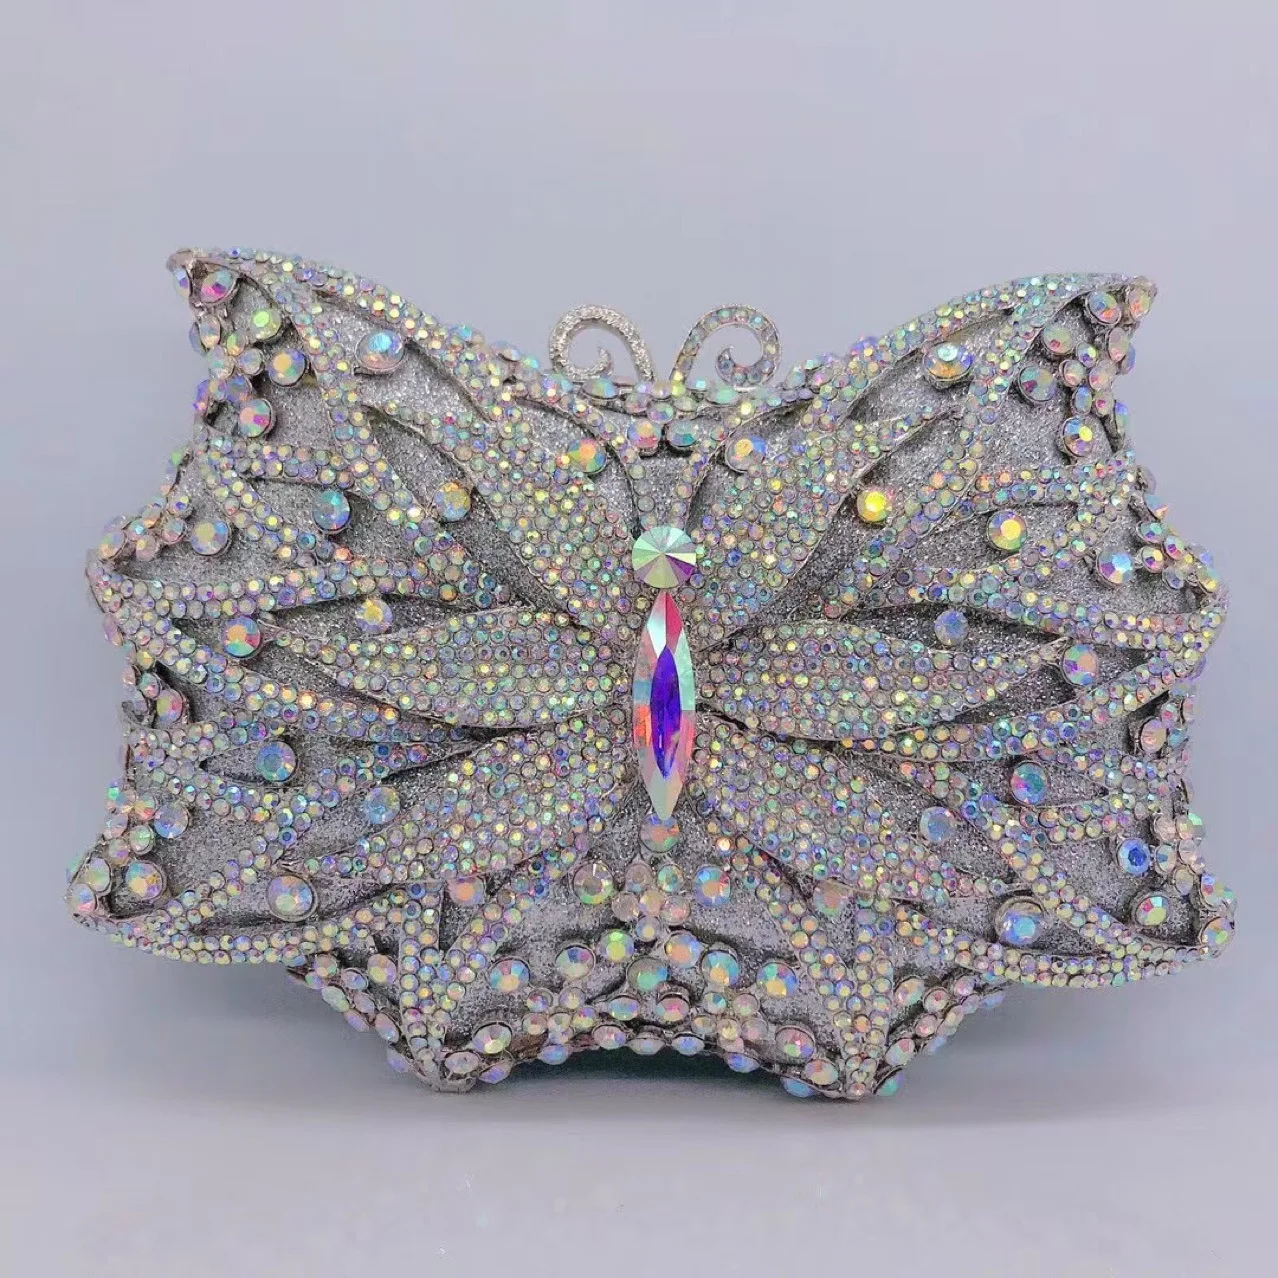 Amiqi MRY142 Luxury Handbag Colorful Flower Butterfly Dinner Clutch Women Evening Bag